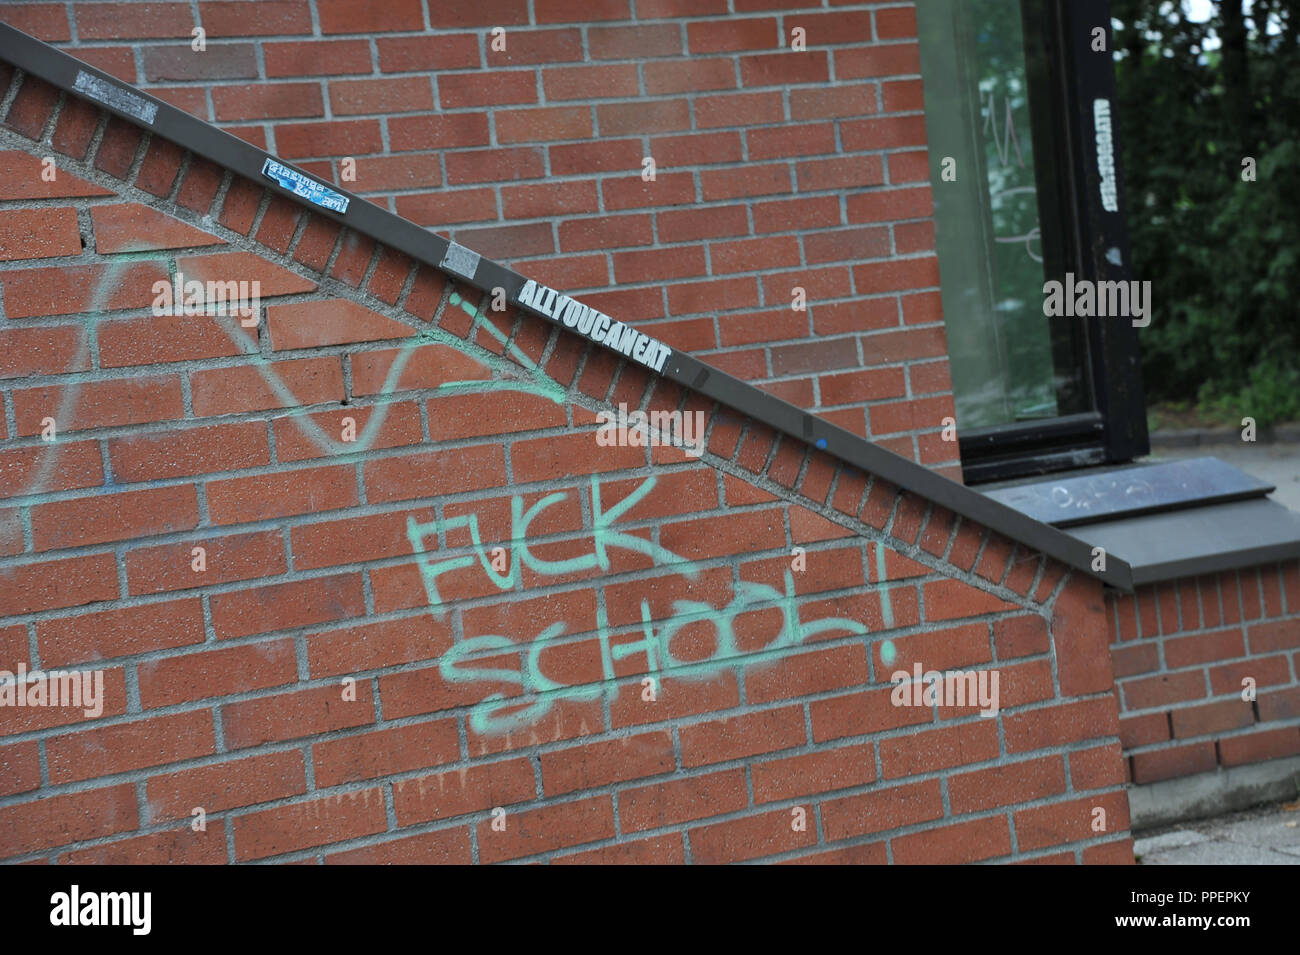 Graffiti on a brick wall of the Erasmus Grasser-Gymnasium in Munich, Germany Stock Photo